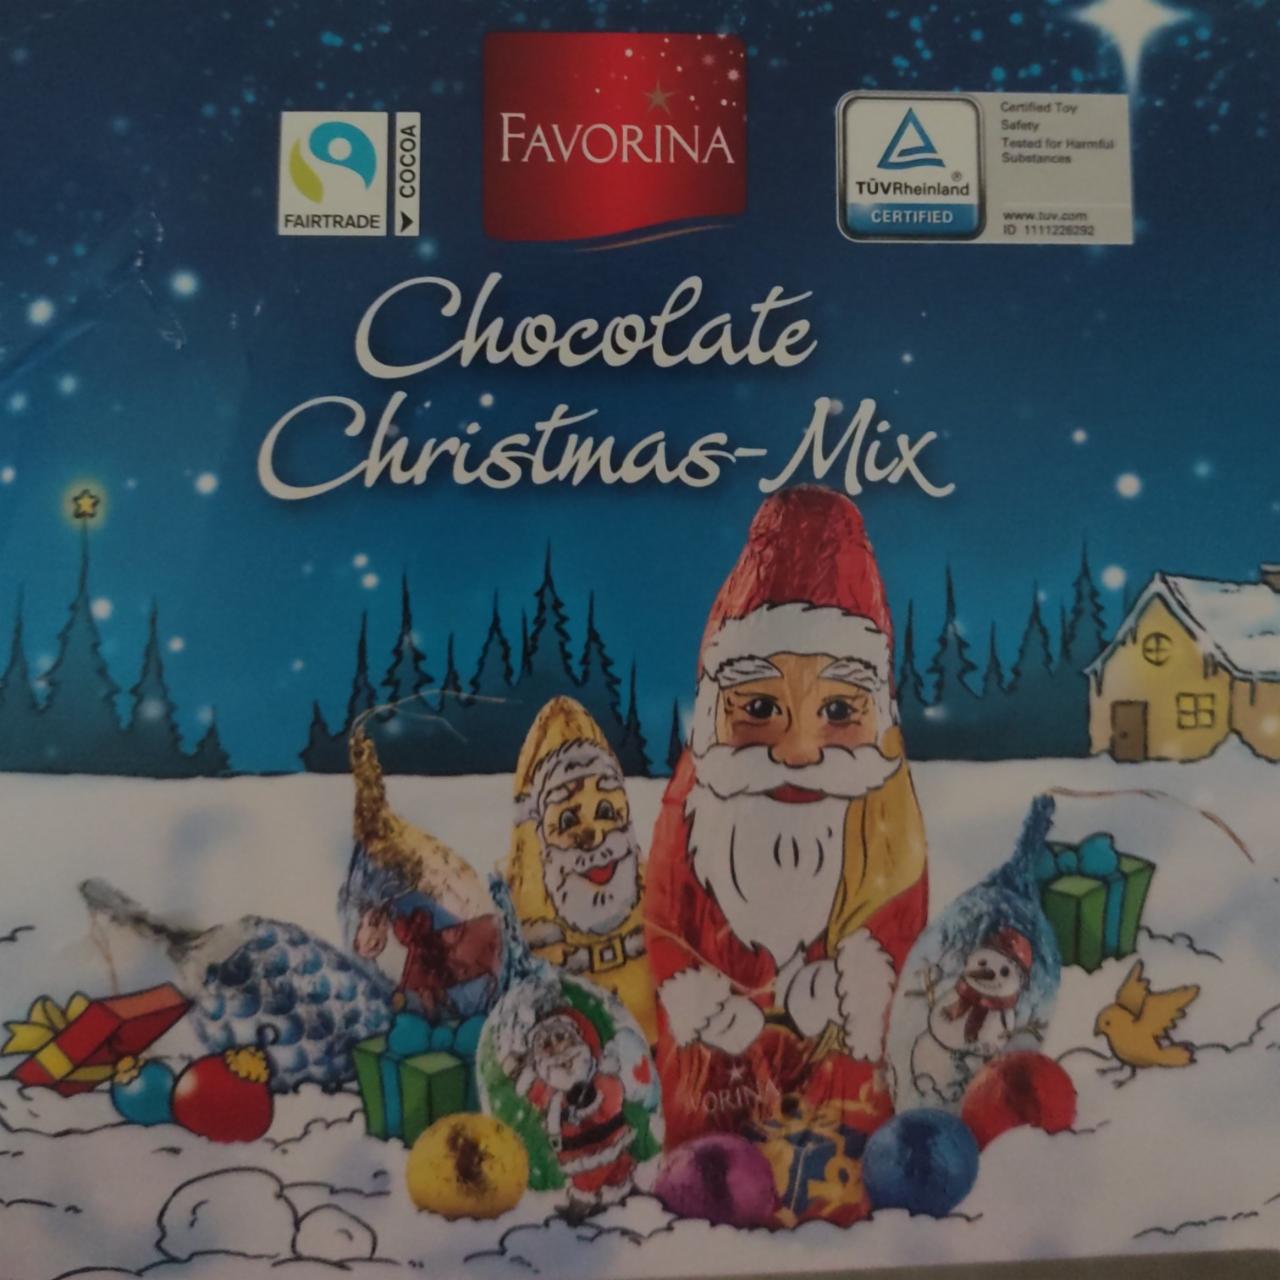 Fotografie - Chocolate Christmas-Mix Favorina